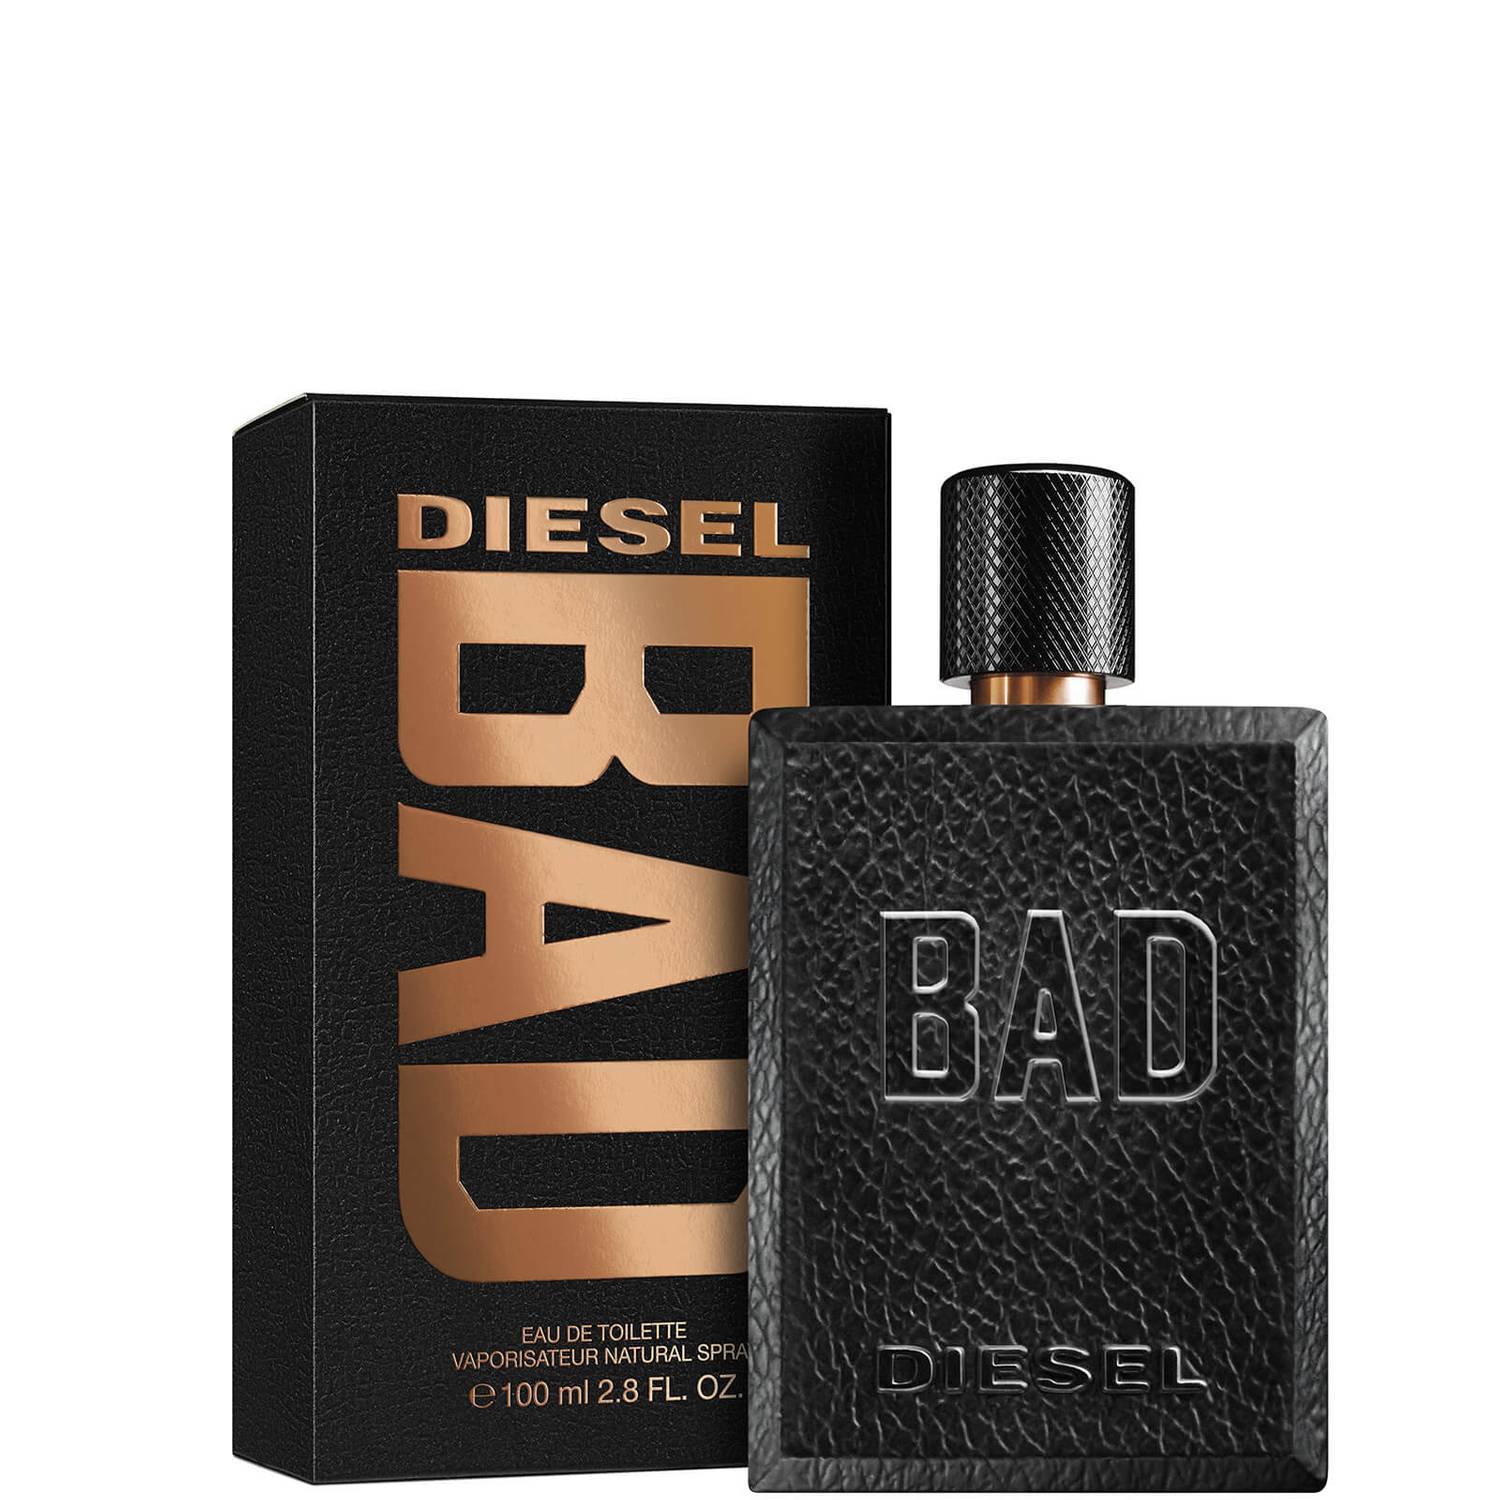 Diesel Bad 100ml EDT Spray